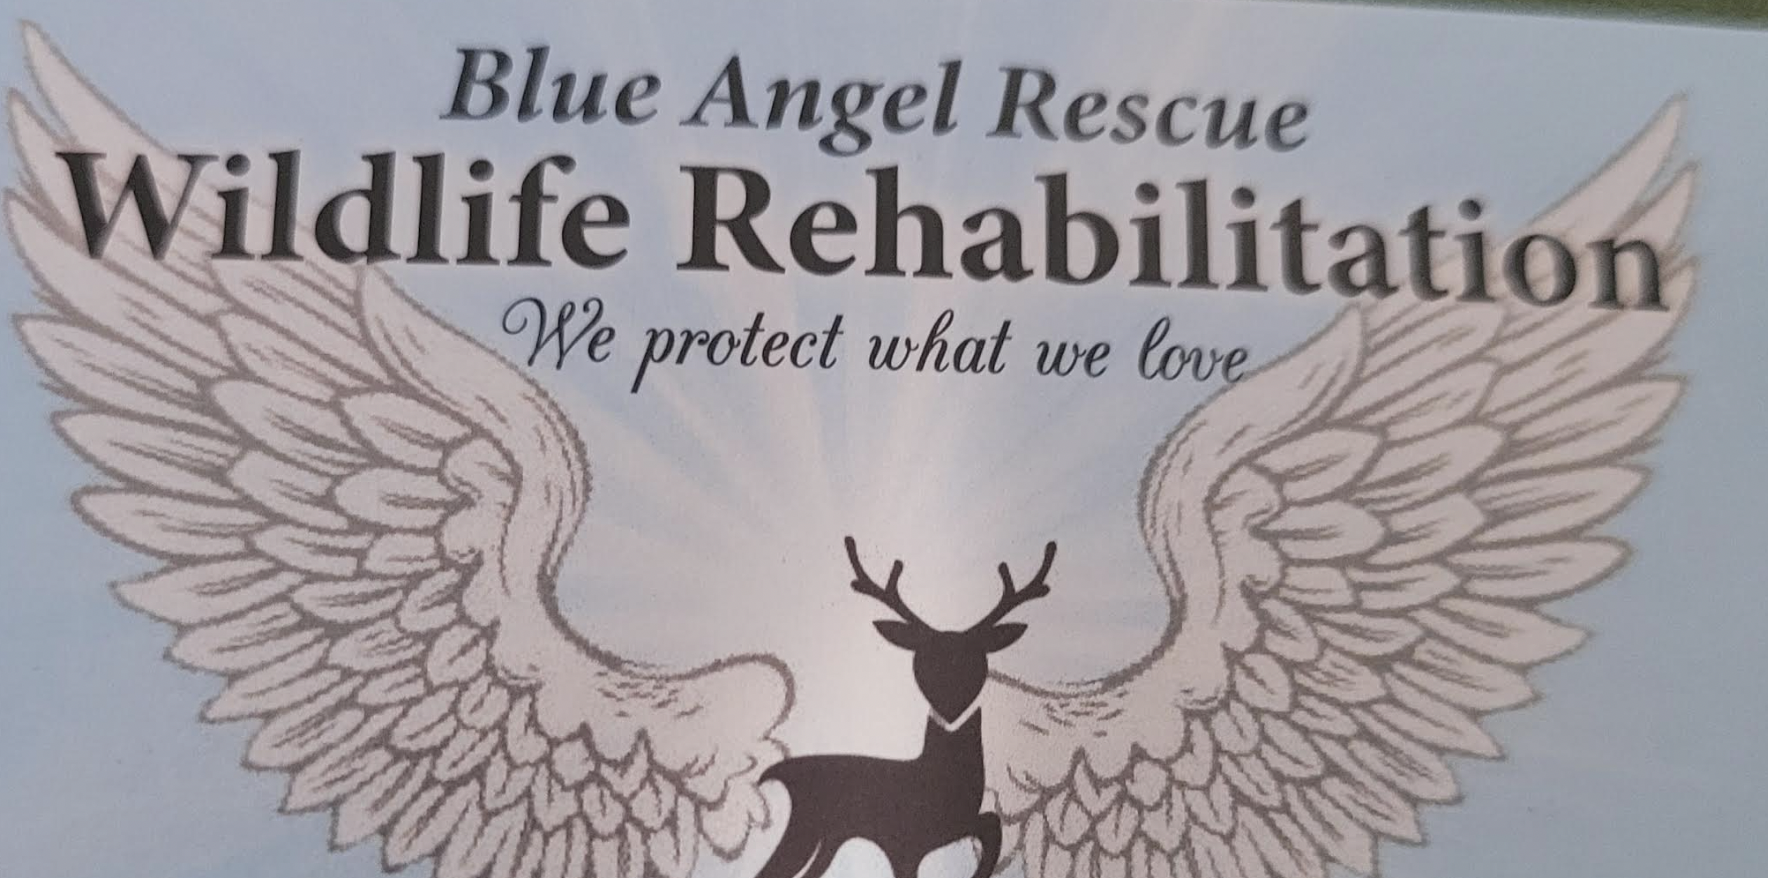 Blue Angel Rescue Wildlife Rehabilitation